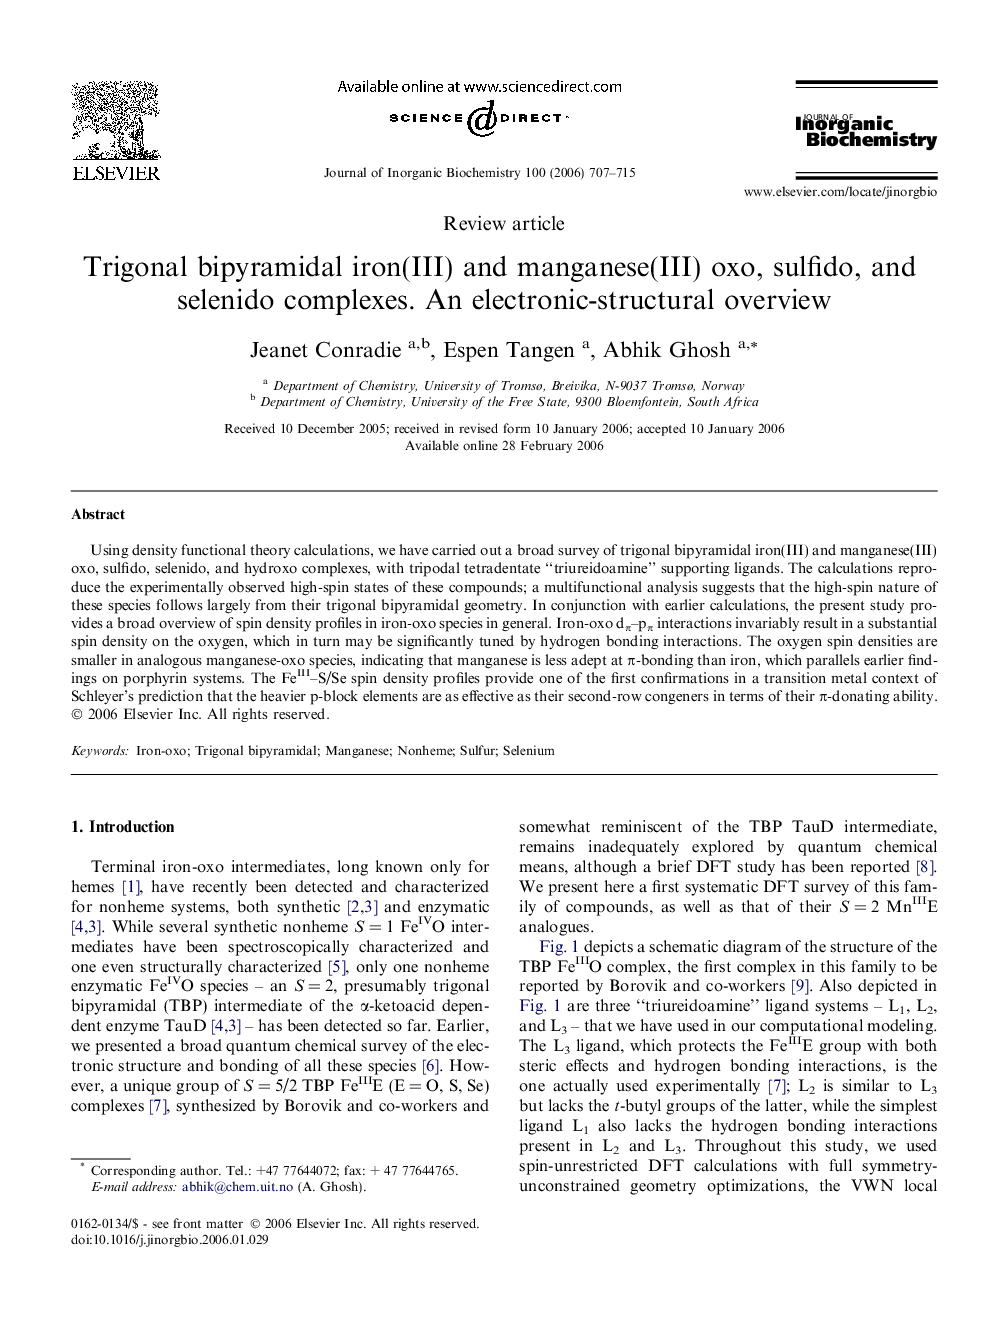 Trigonal bipyramidal iron(III) and manganese(III) oxo, sulfido, and selenido complexes. An electronic-structural overview